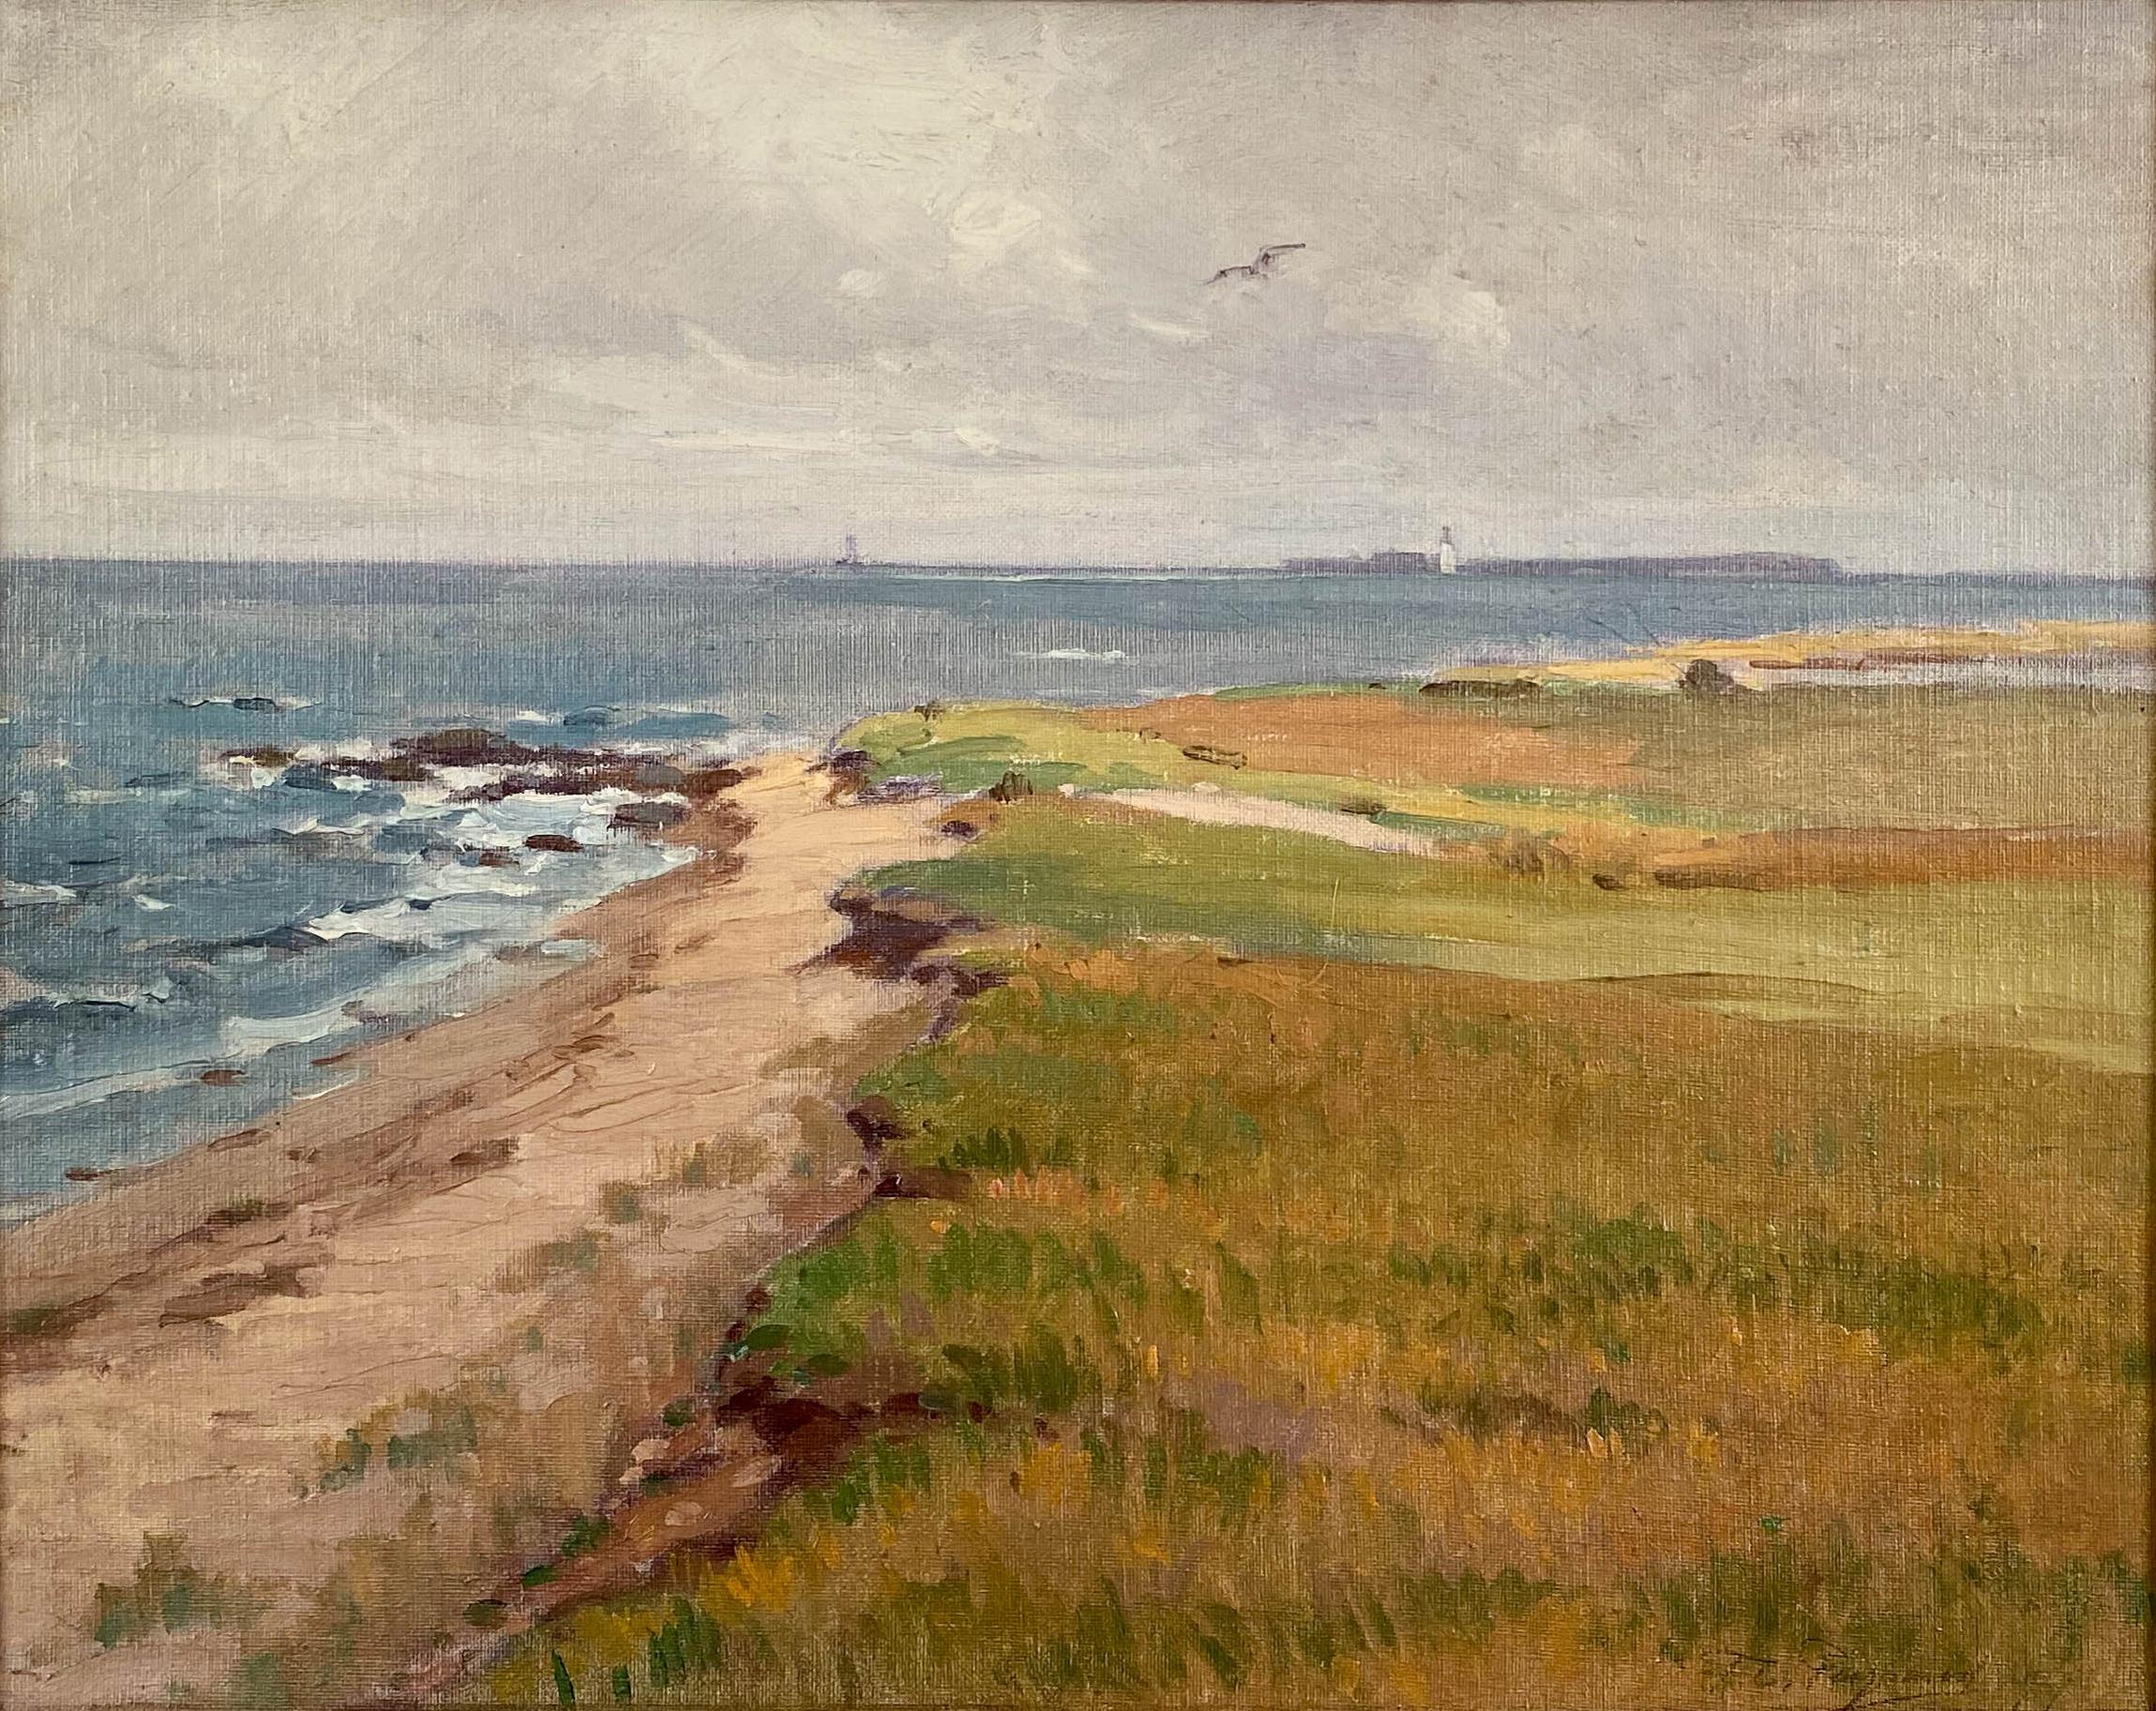 Along the Coastline - Painting by Frank Peyraud